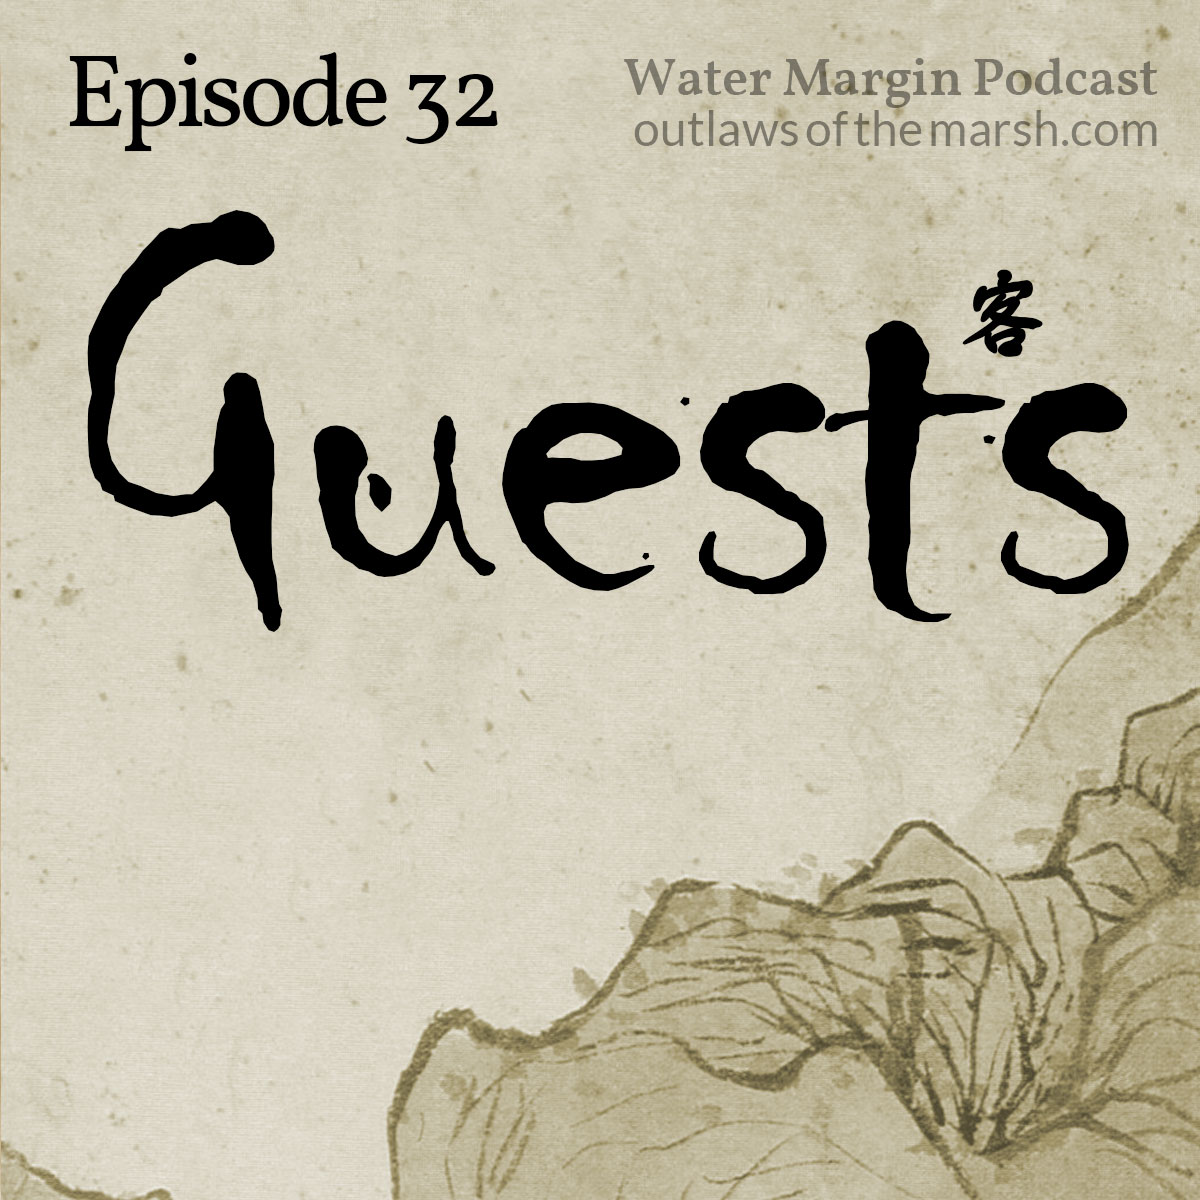 Water Margin Podcast: Episode 032